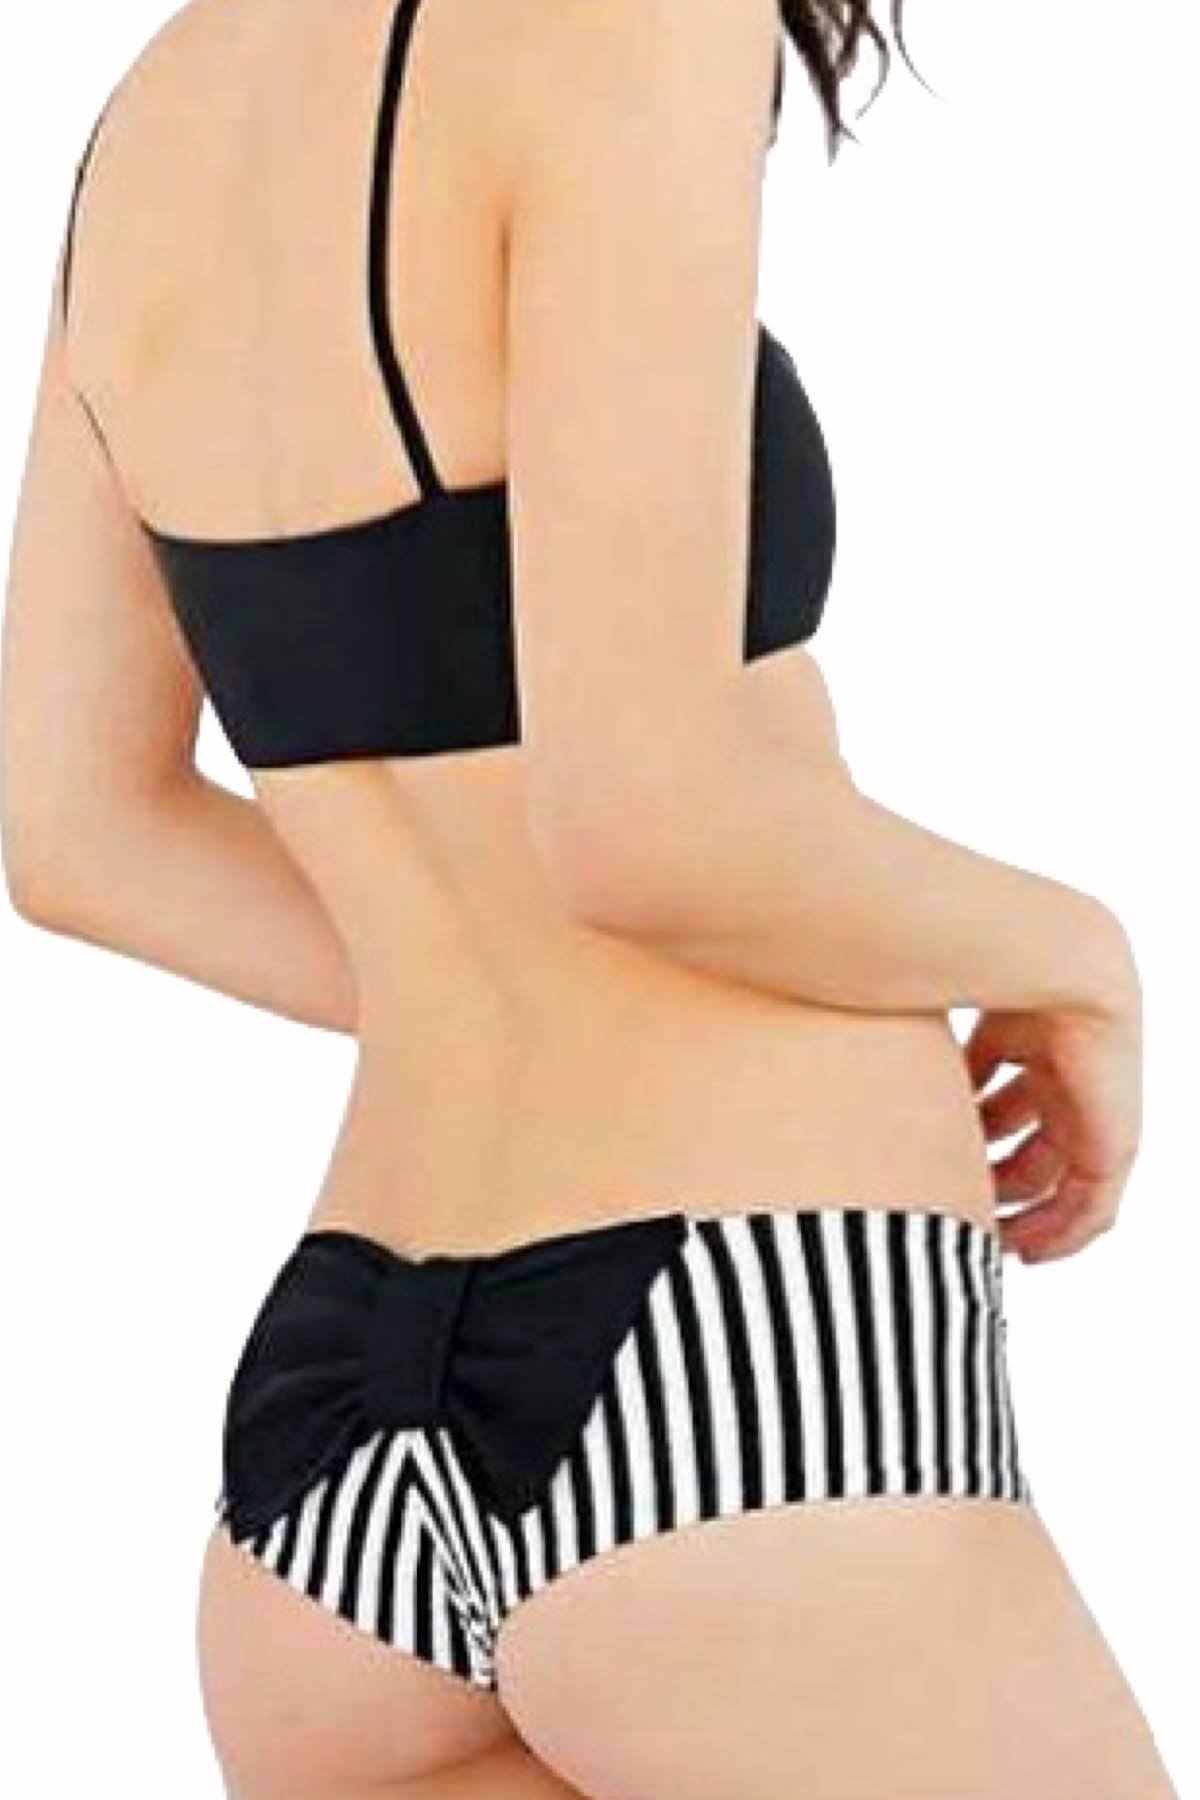 Lolli Black & White Stripe Bow Bottom